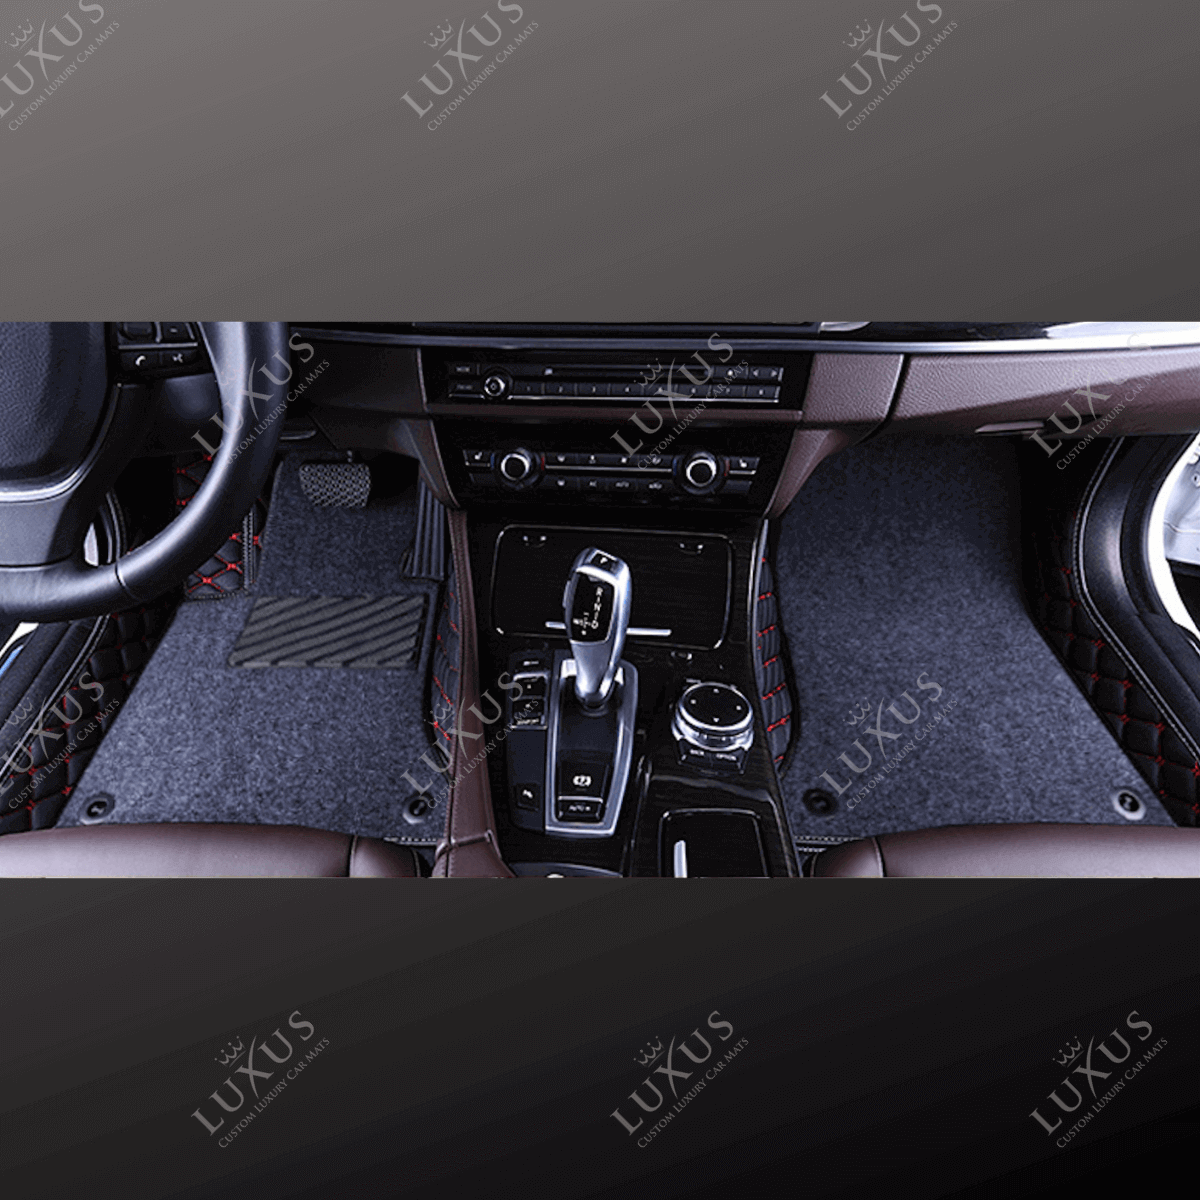 Black & Red Stitching Base & Grey Top Carpet Double Layer Luxury Car Mats Set